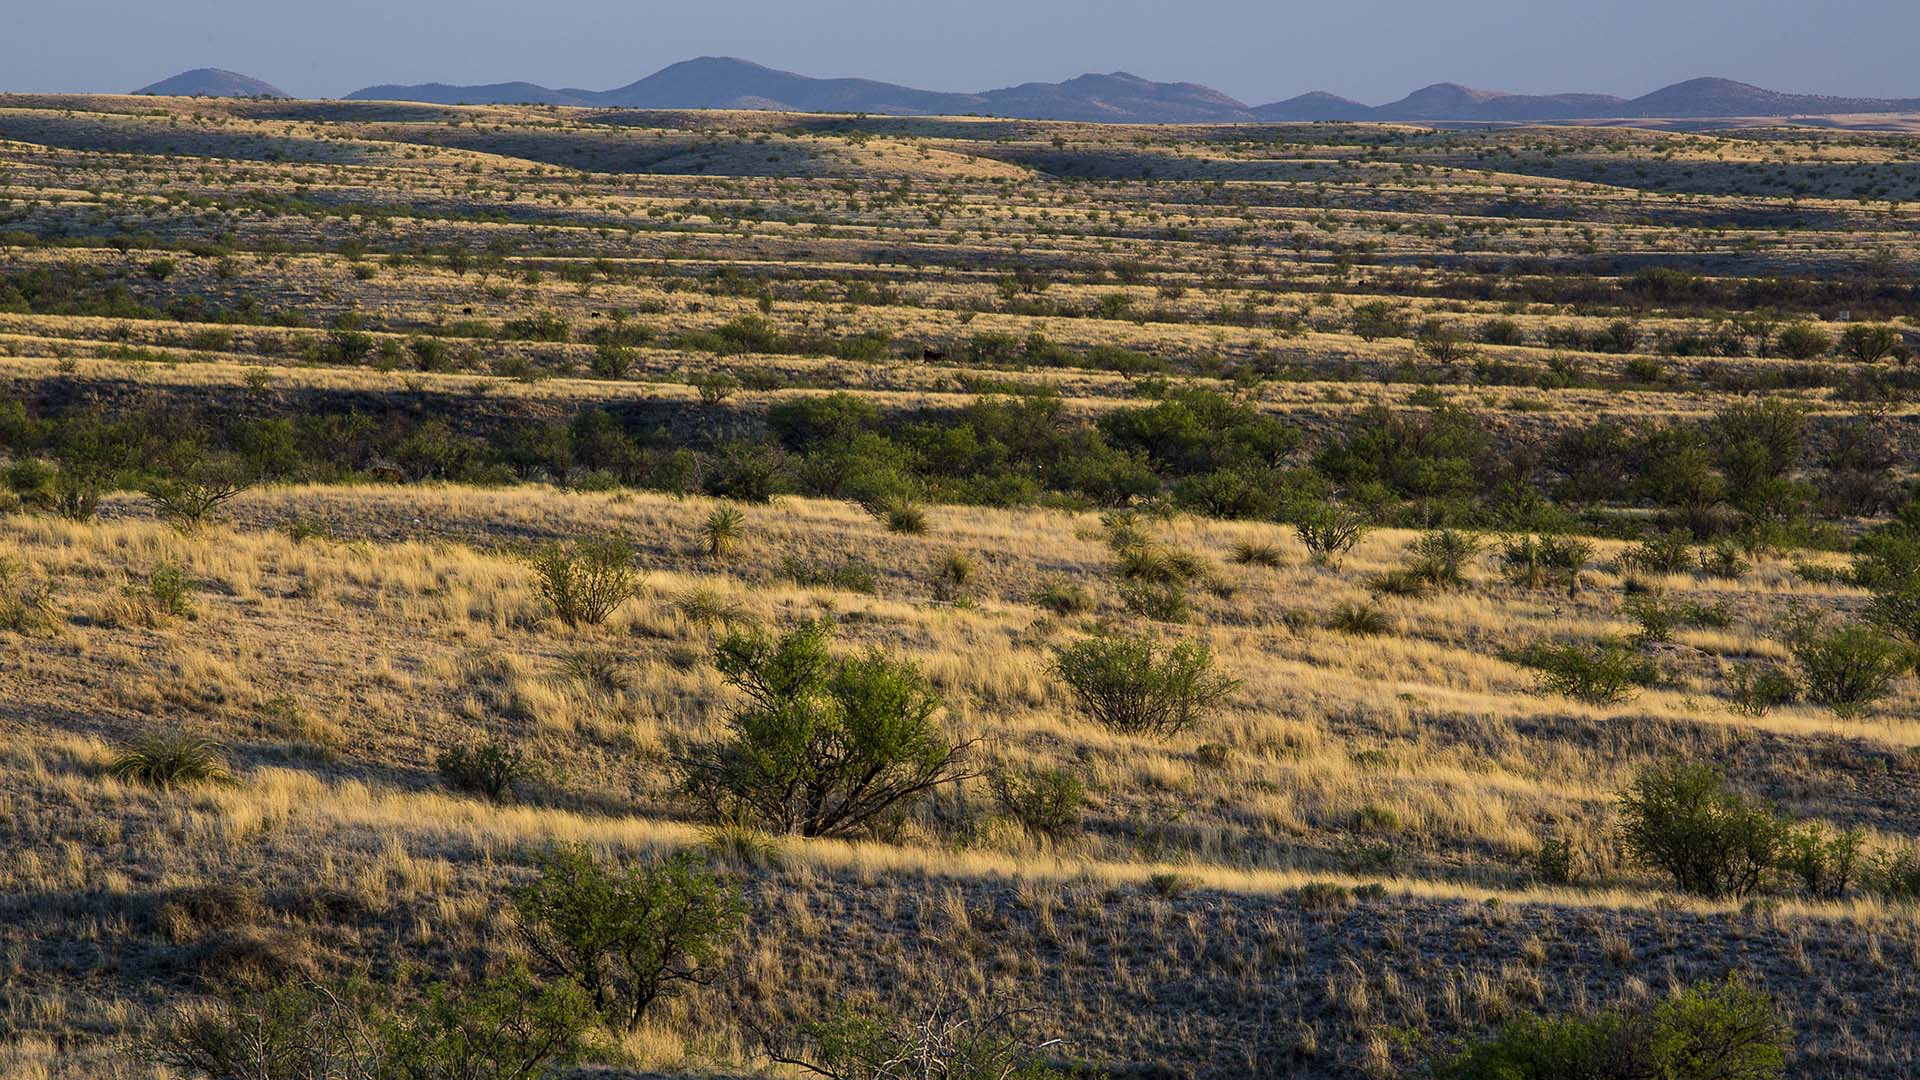 Las Cienegas National Conservation Area in Arizona, 2016.